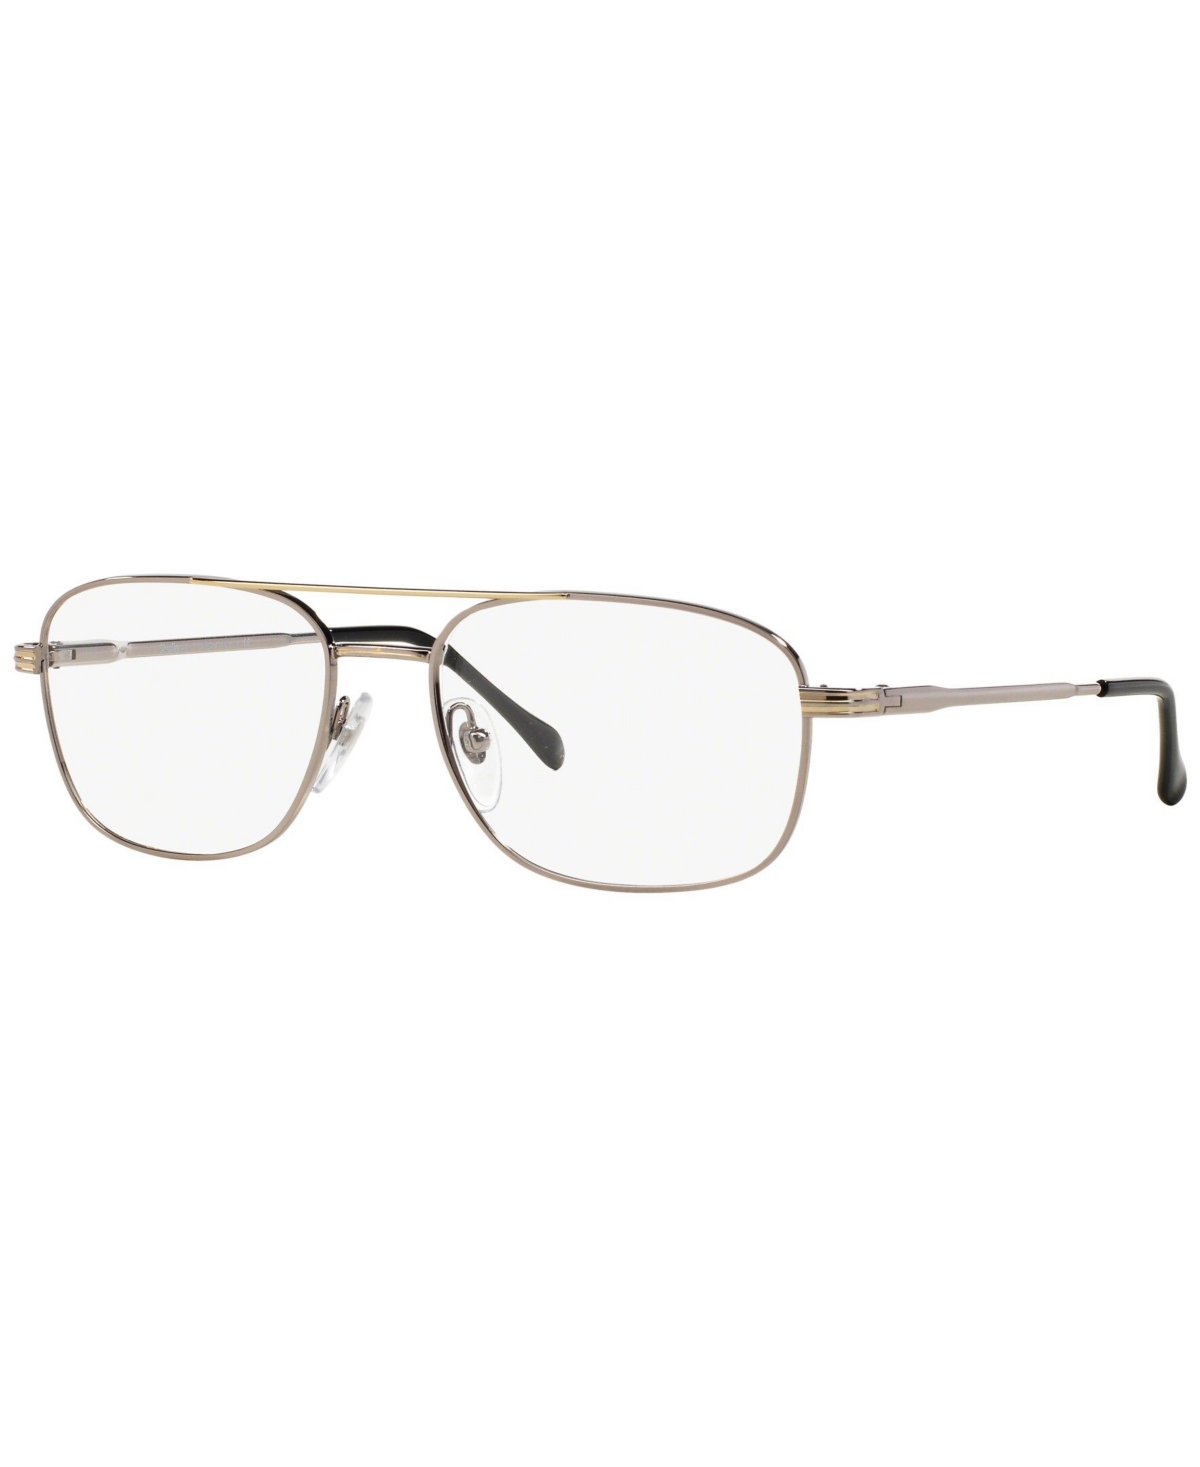 SF2152 Men's Square Eyeglasses - Dark Brown